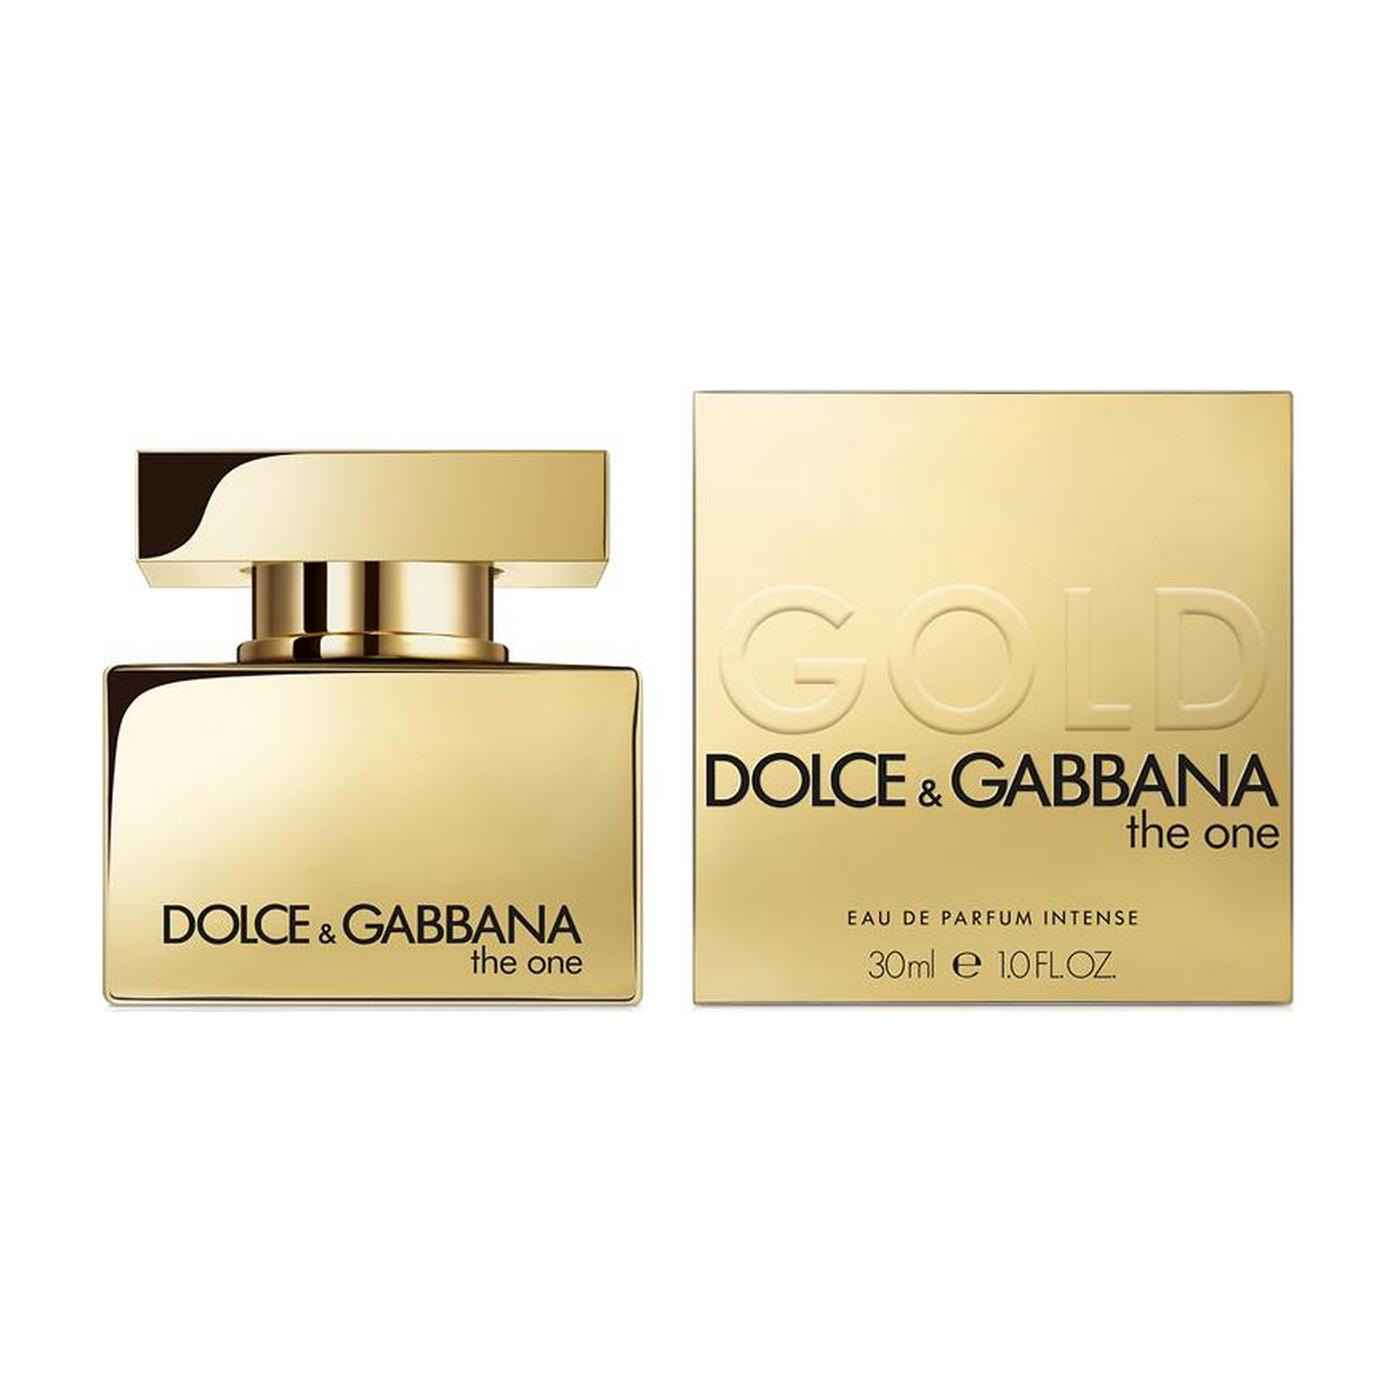 Дольче габбана ван цена. Dolce Gabbana the one Gold intense. Dolce Gabbana the one 75 ml. Дольче Габбана оне Голд Интенс. Dolce Gabbana the one Gold intense женские.